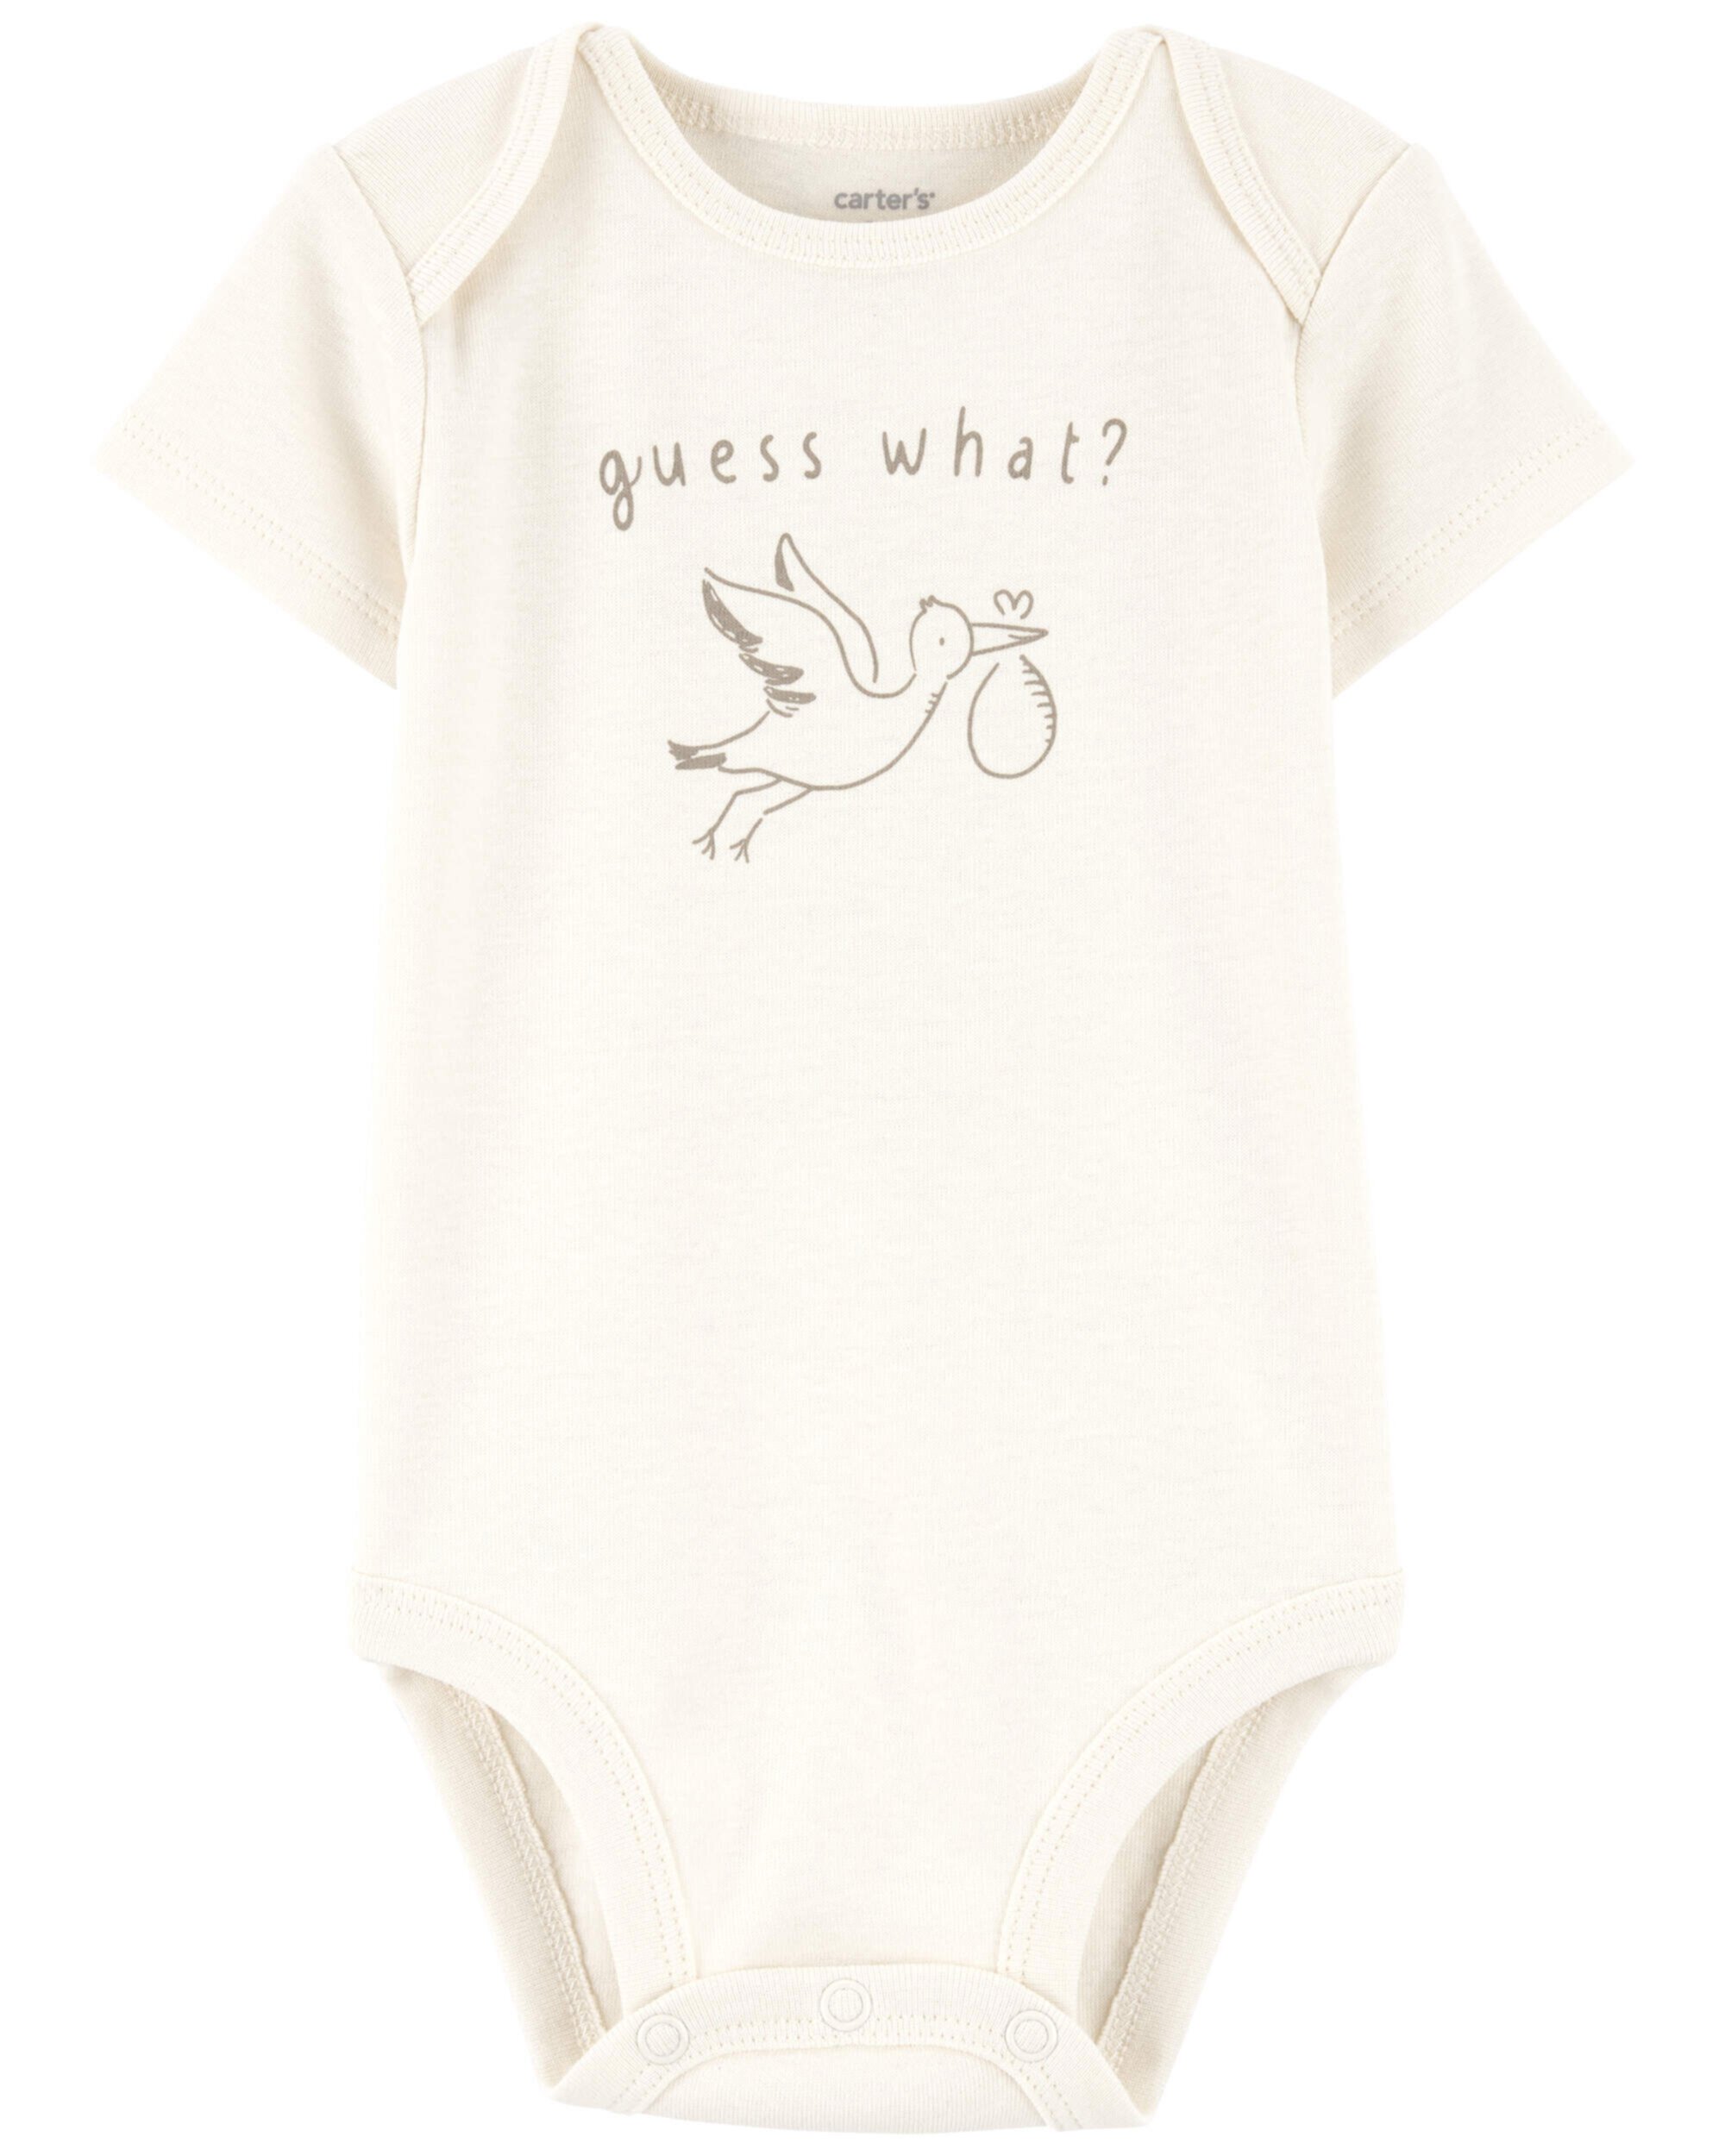 Детские Боди Carter's Baby Stork Announcement Bodysuit Carter's